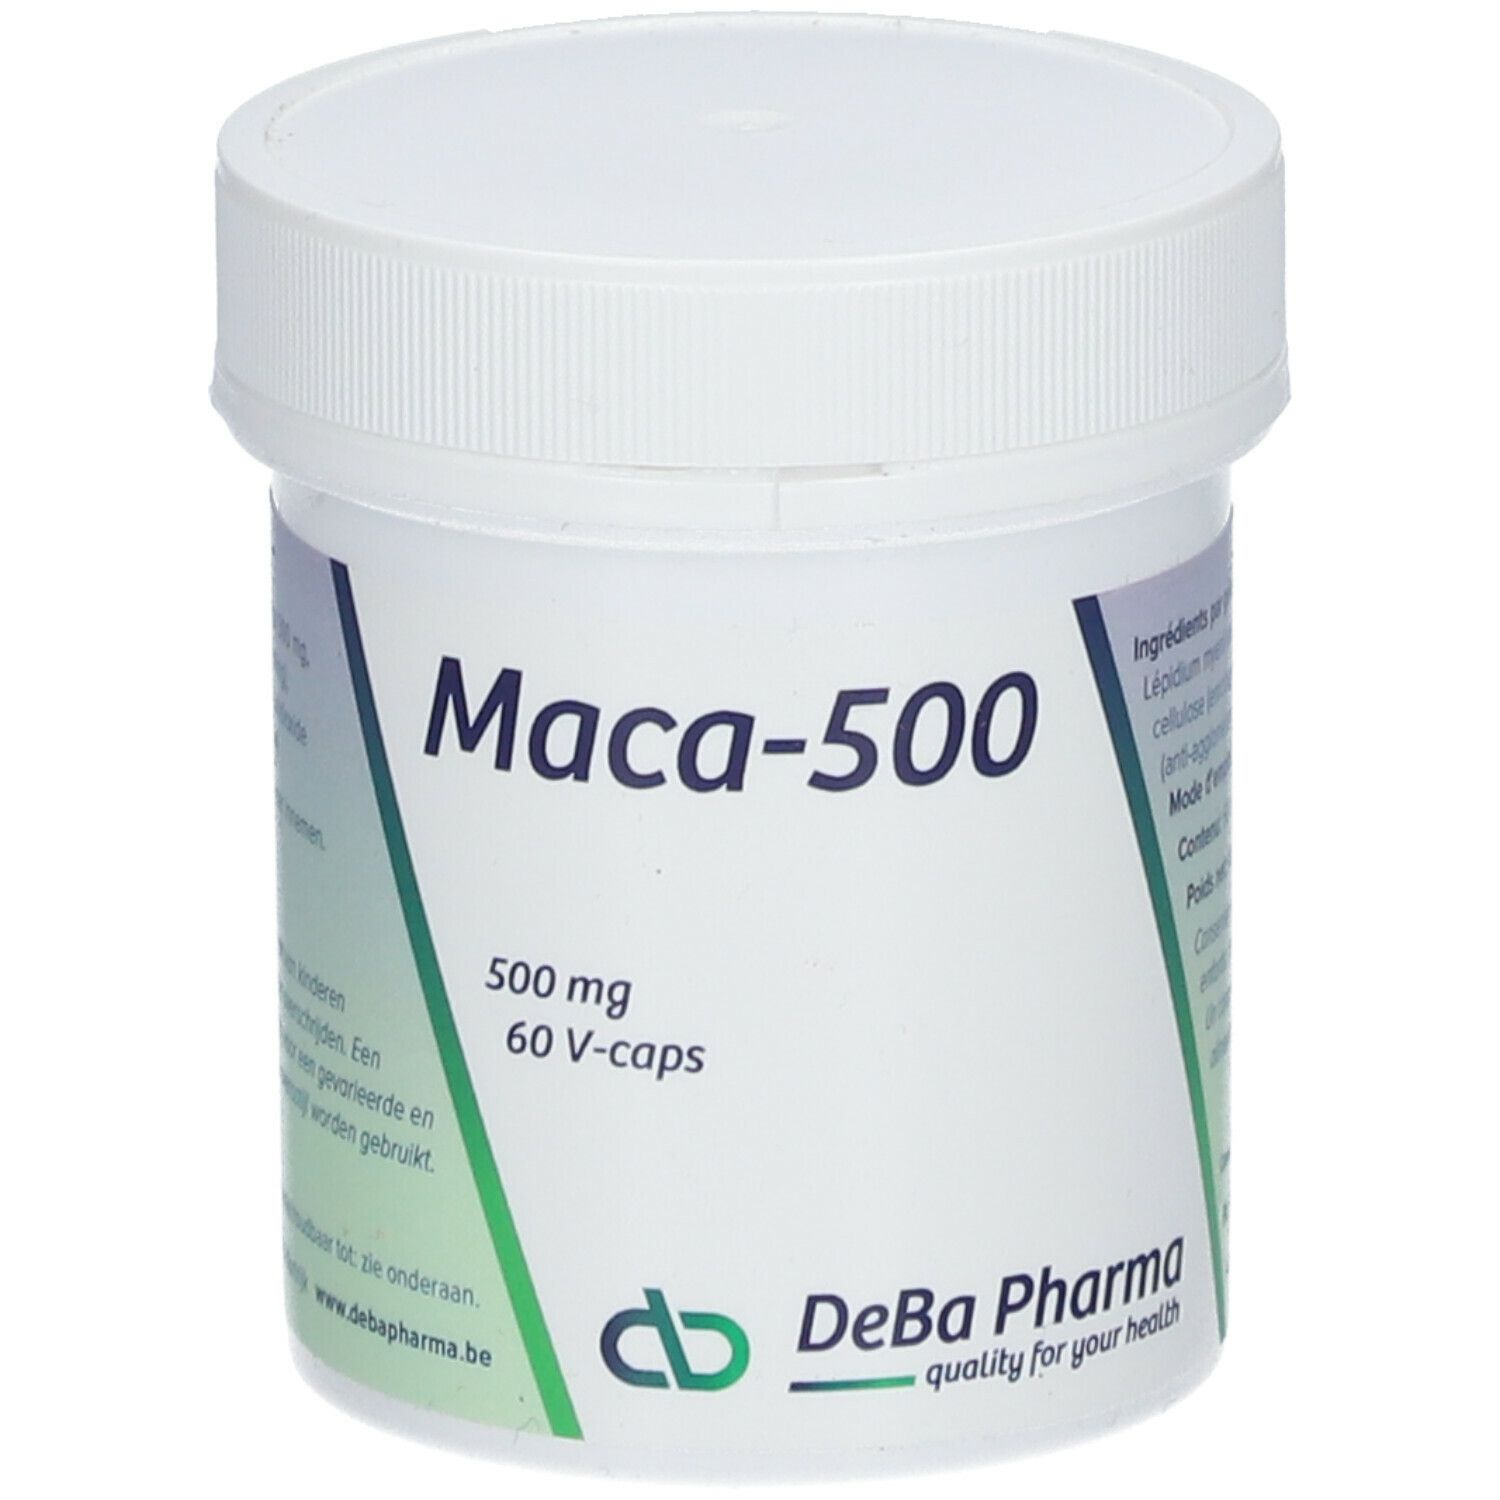 DeBa Pharma Maca-500